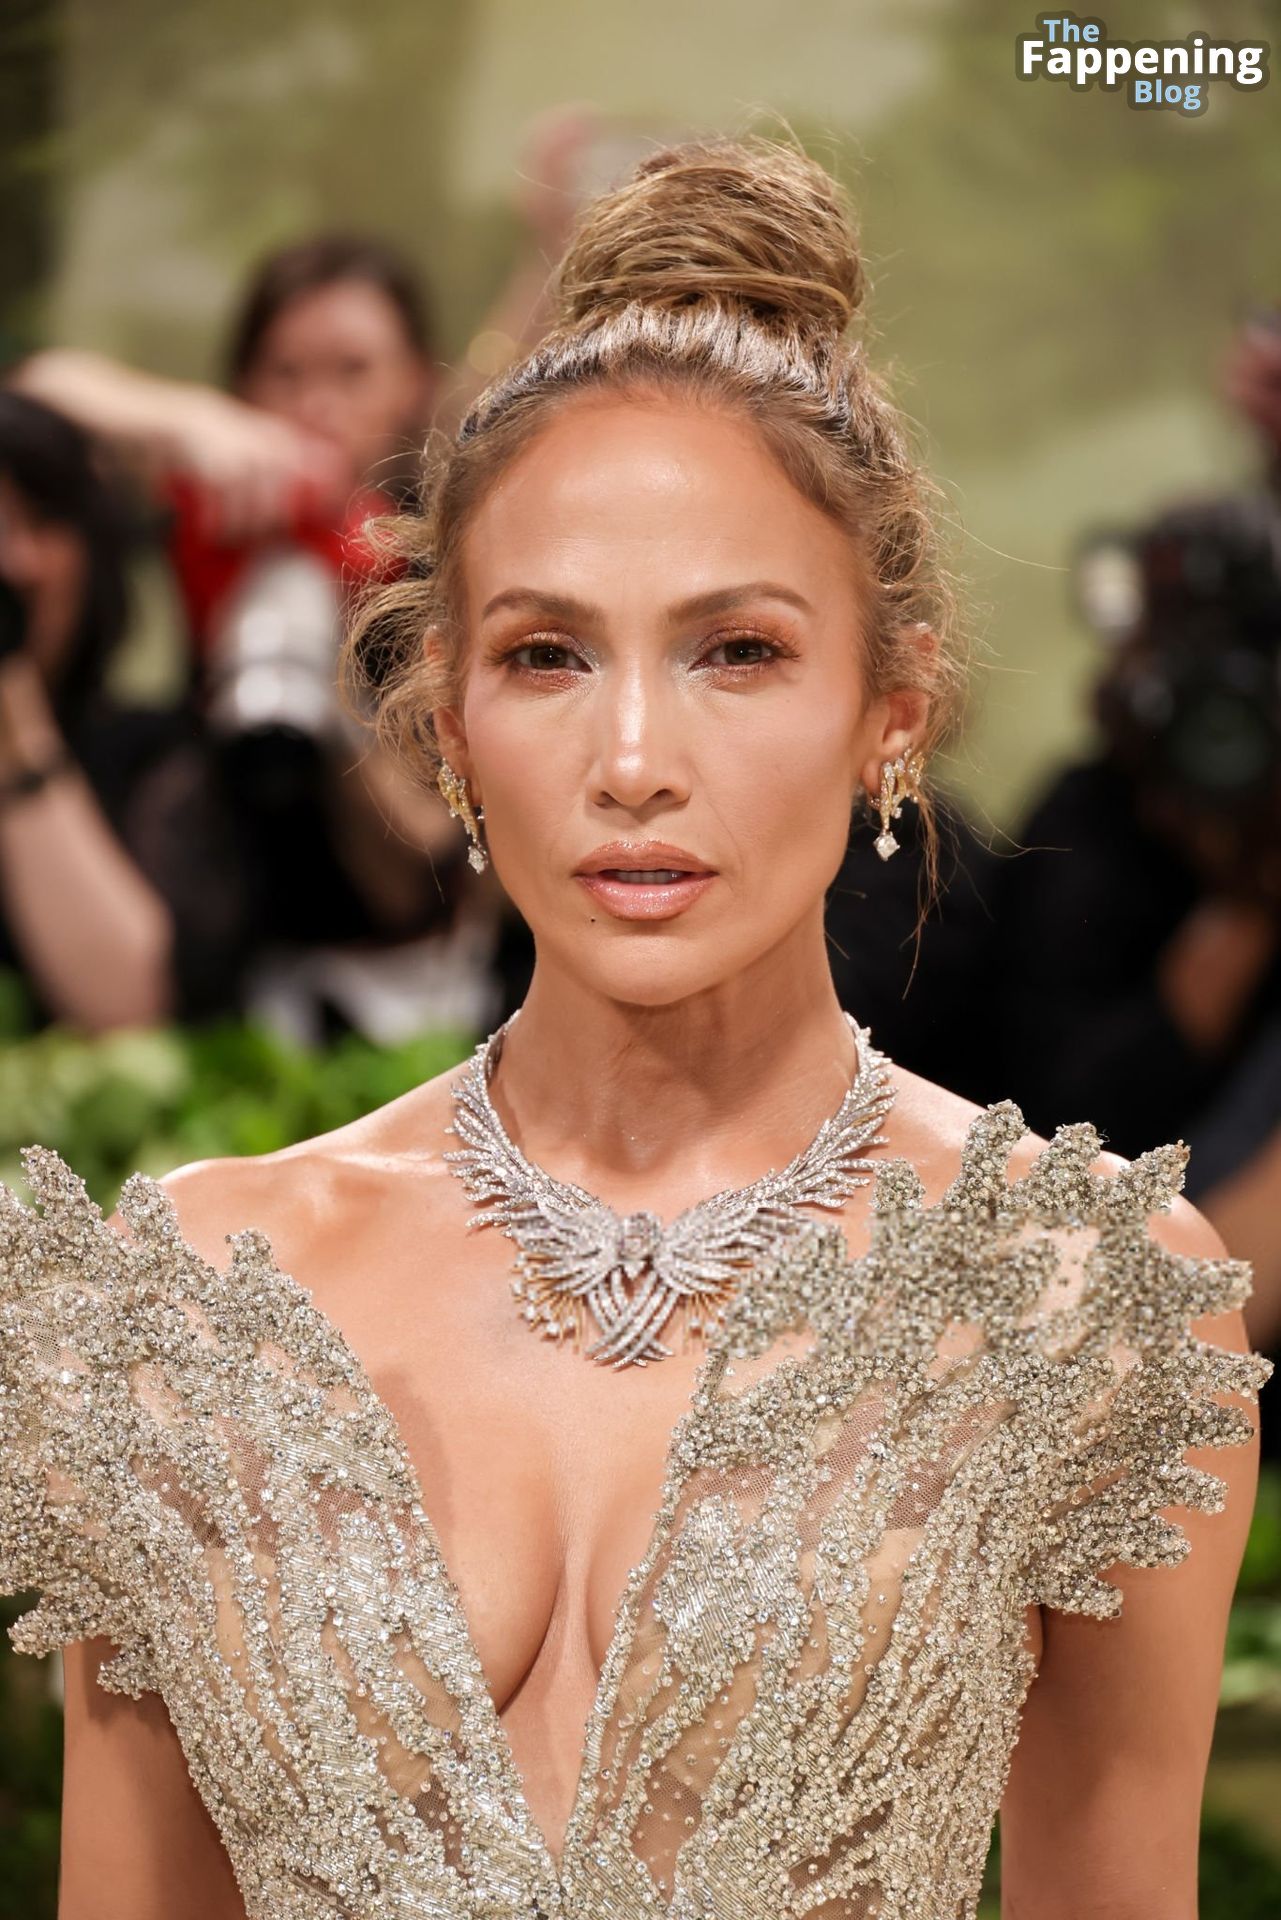 Jennifer-Lopez-Hot-35-The-Fappening-Blog.jpg